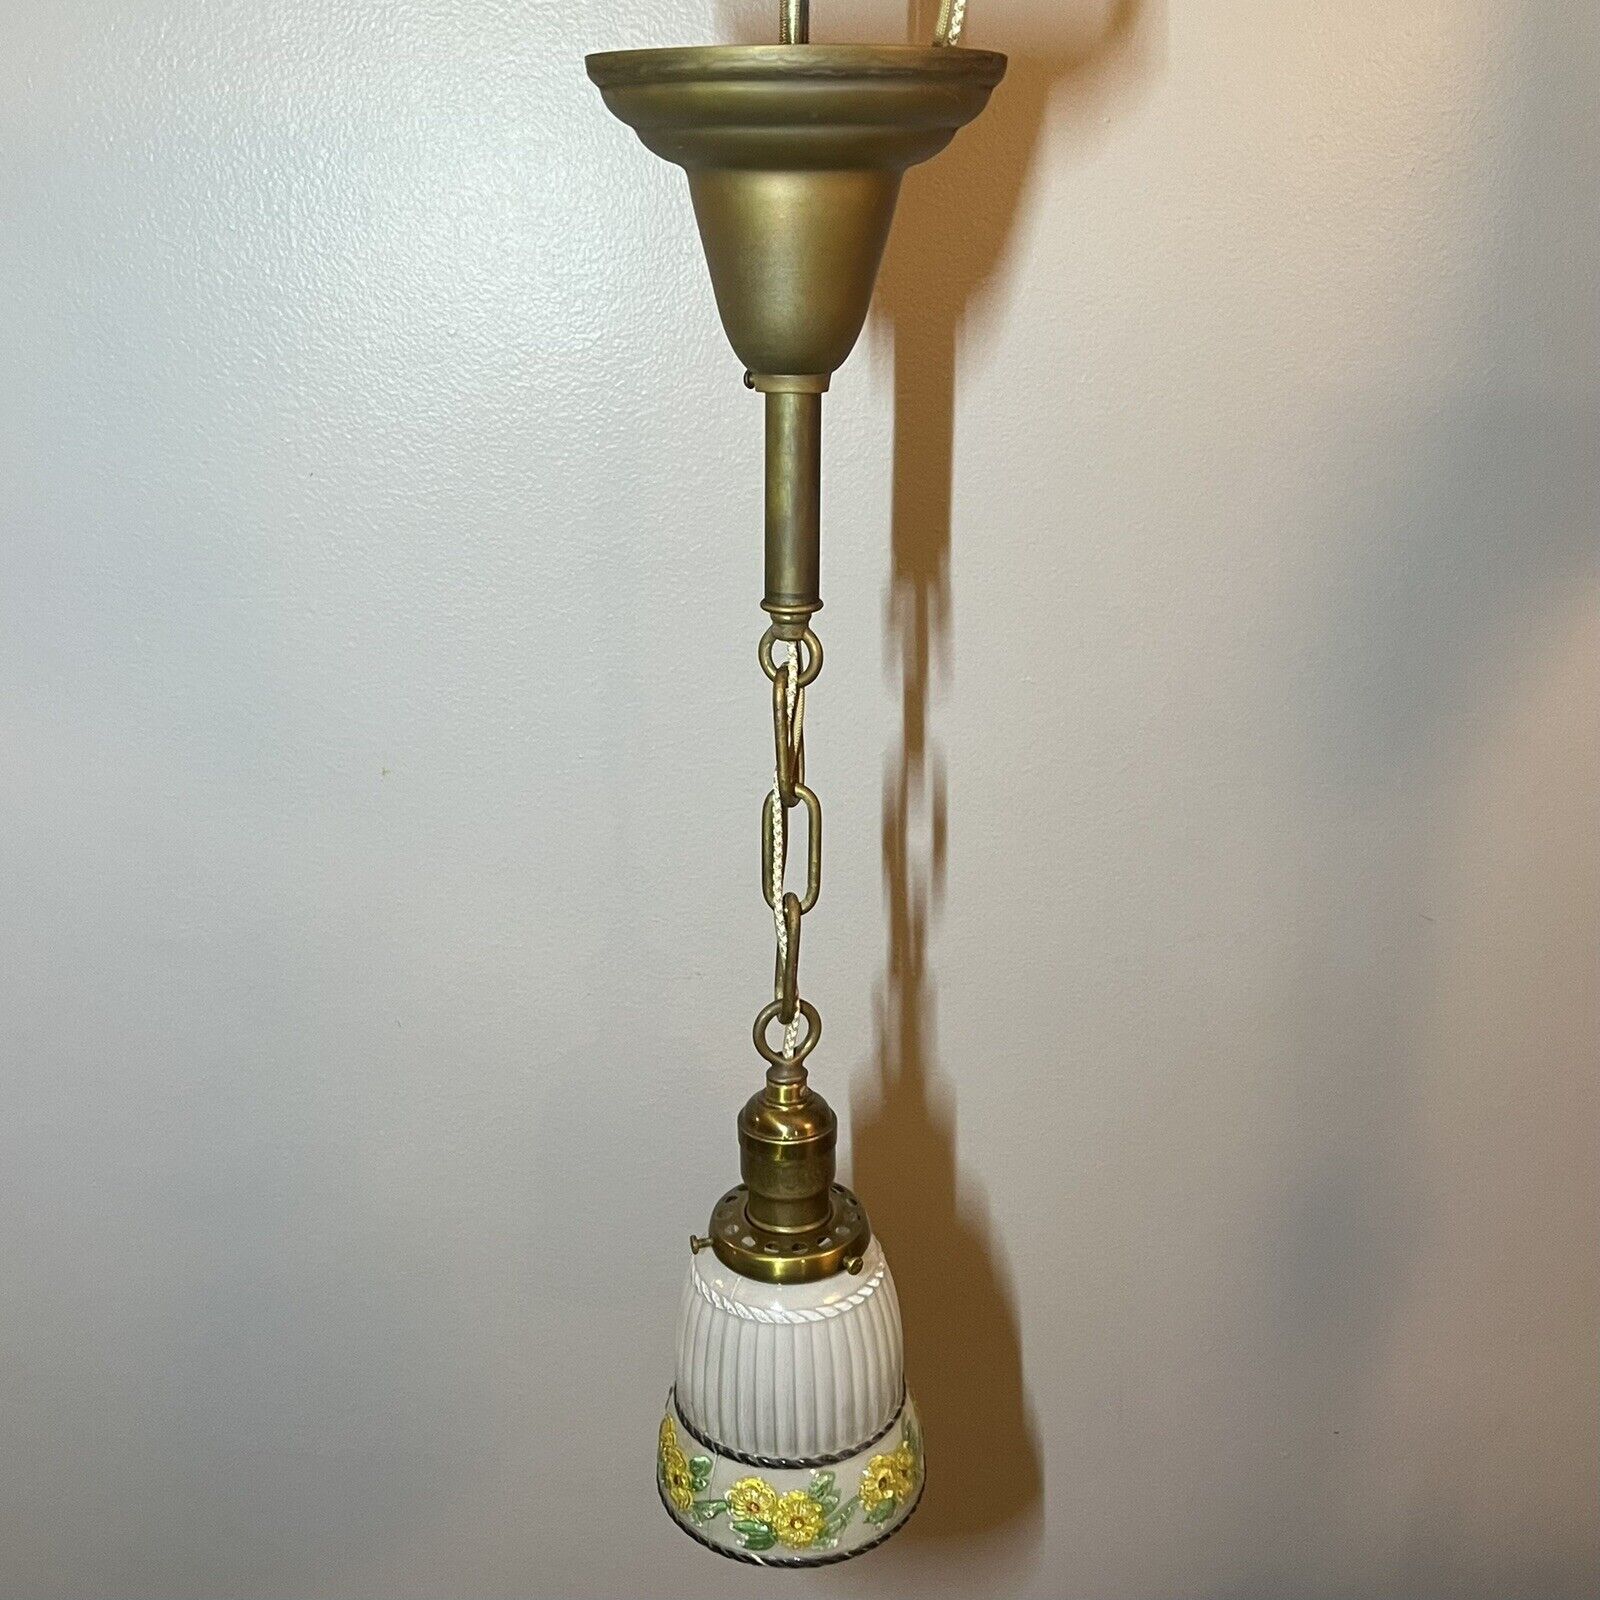 Single Brass Entry Pendant Light Fixture Unique Glass Shade Rewired Light 14G